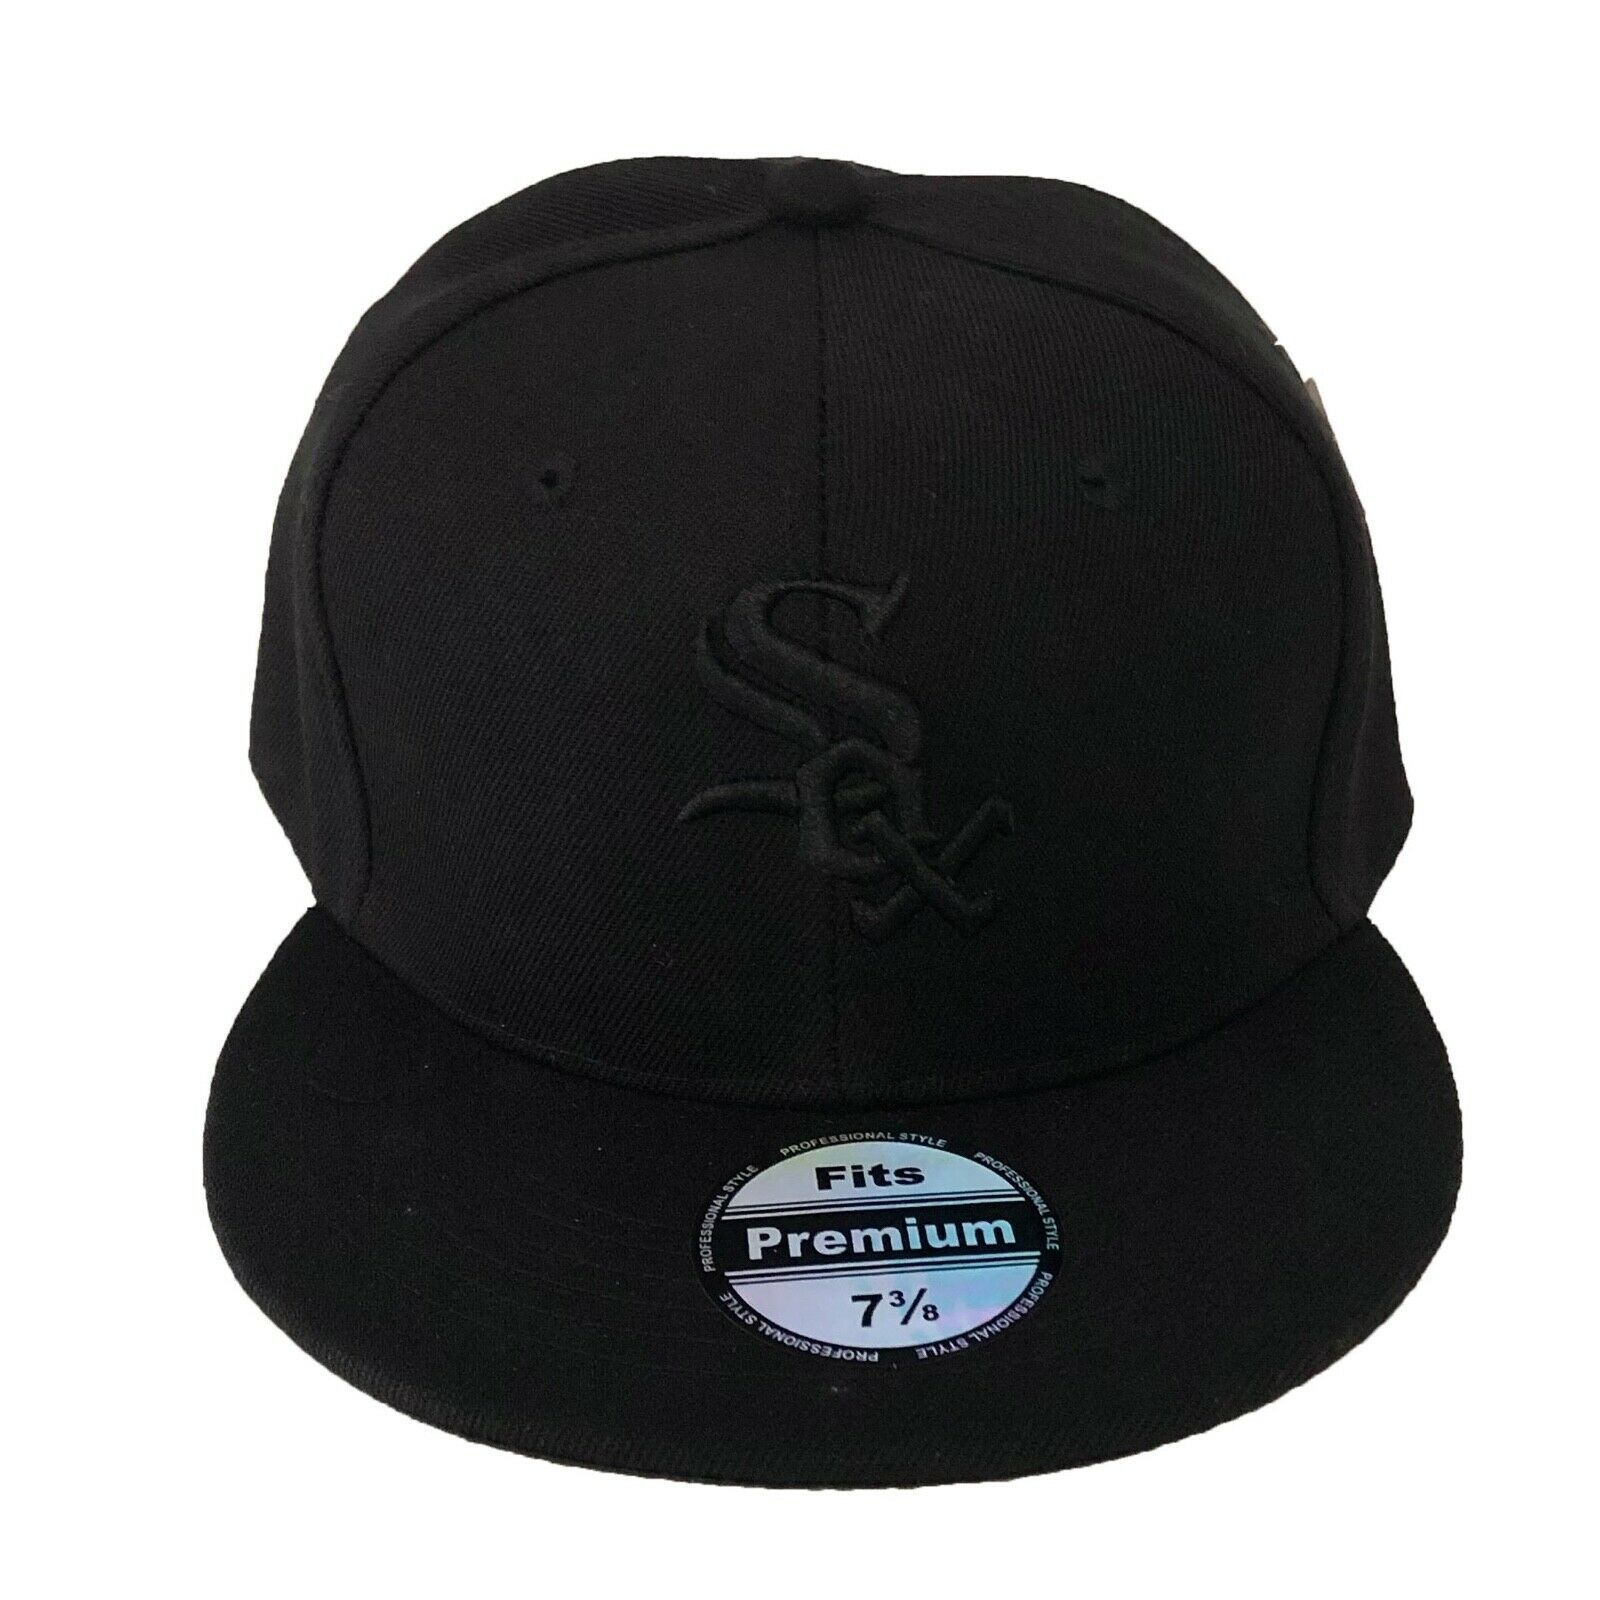 NEW Mens Chicago White Sox Baseball Cap Fitted Hat Multi Size Black w Black logo